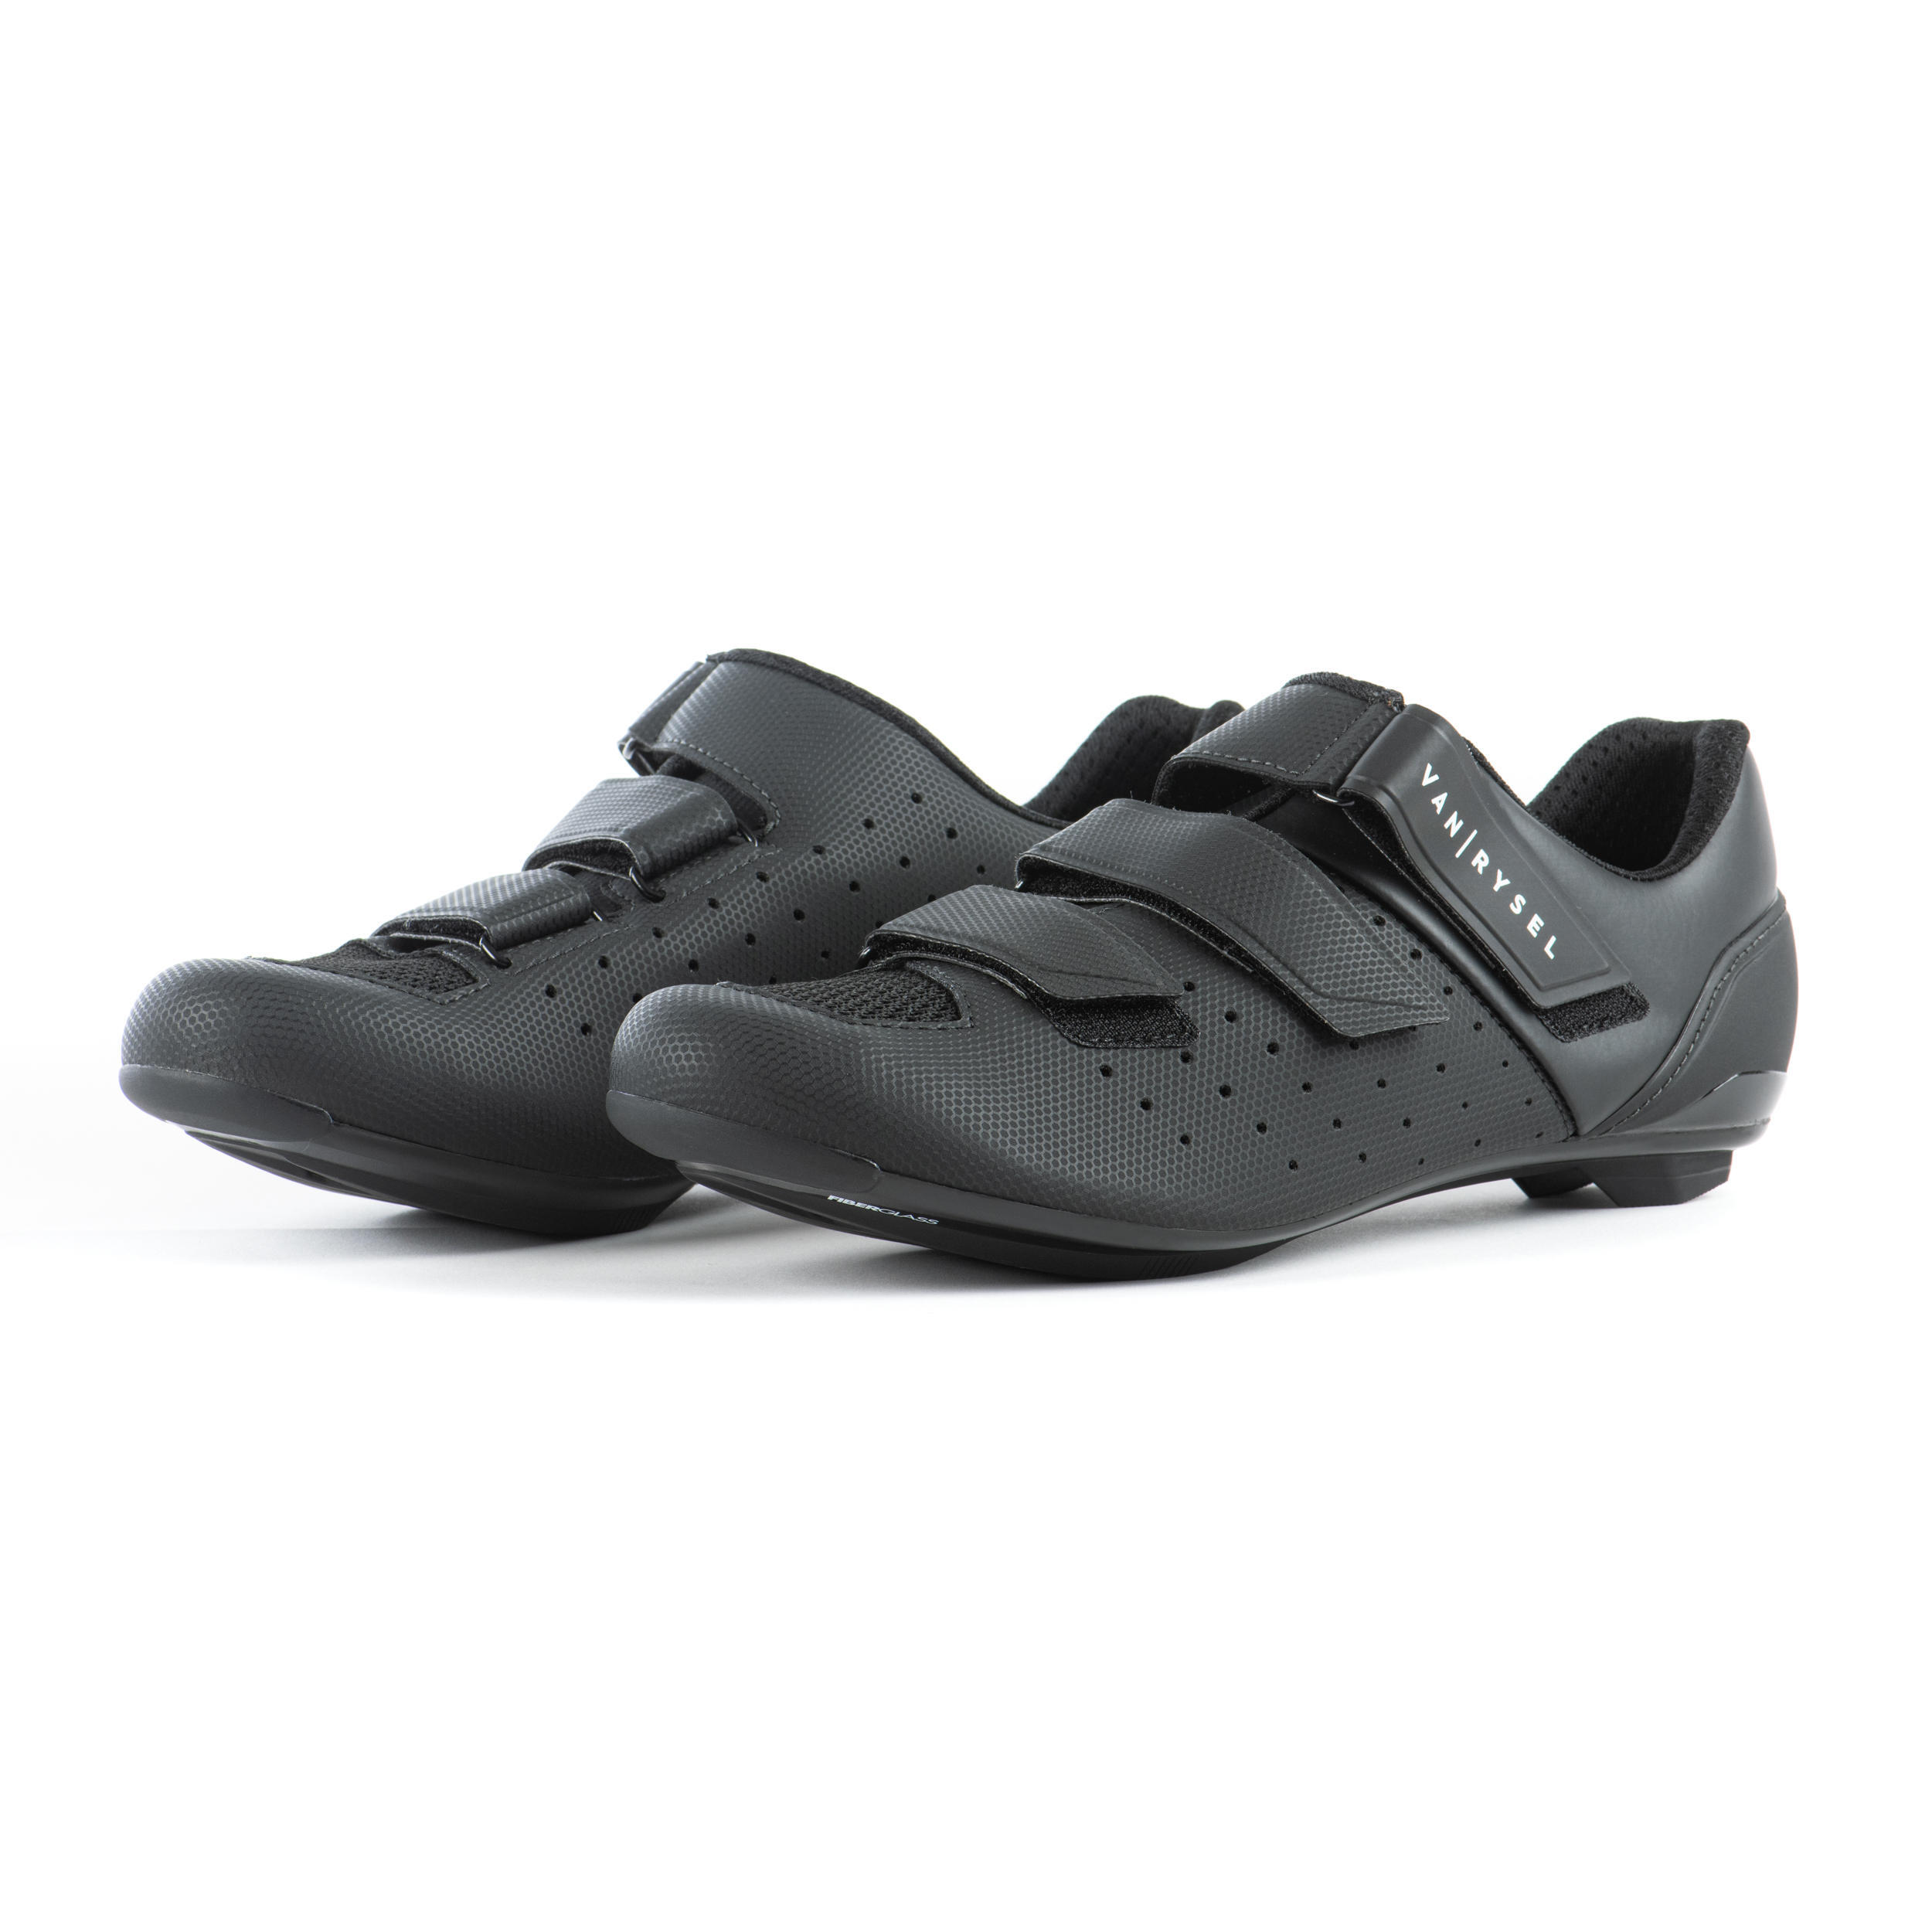 VAN RYSEL Sportive Road Cycling Shoes 500 - Black